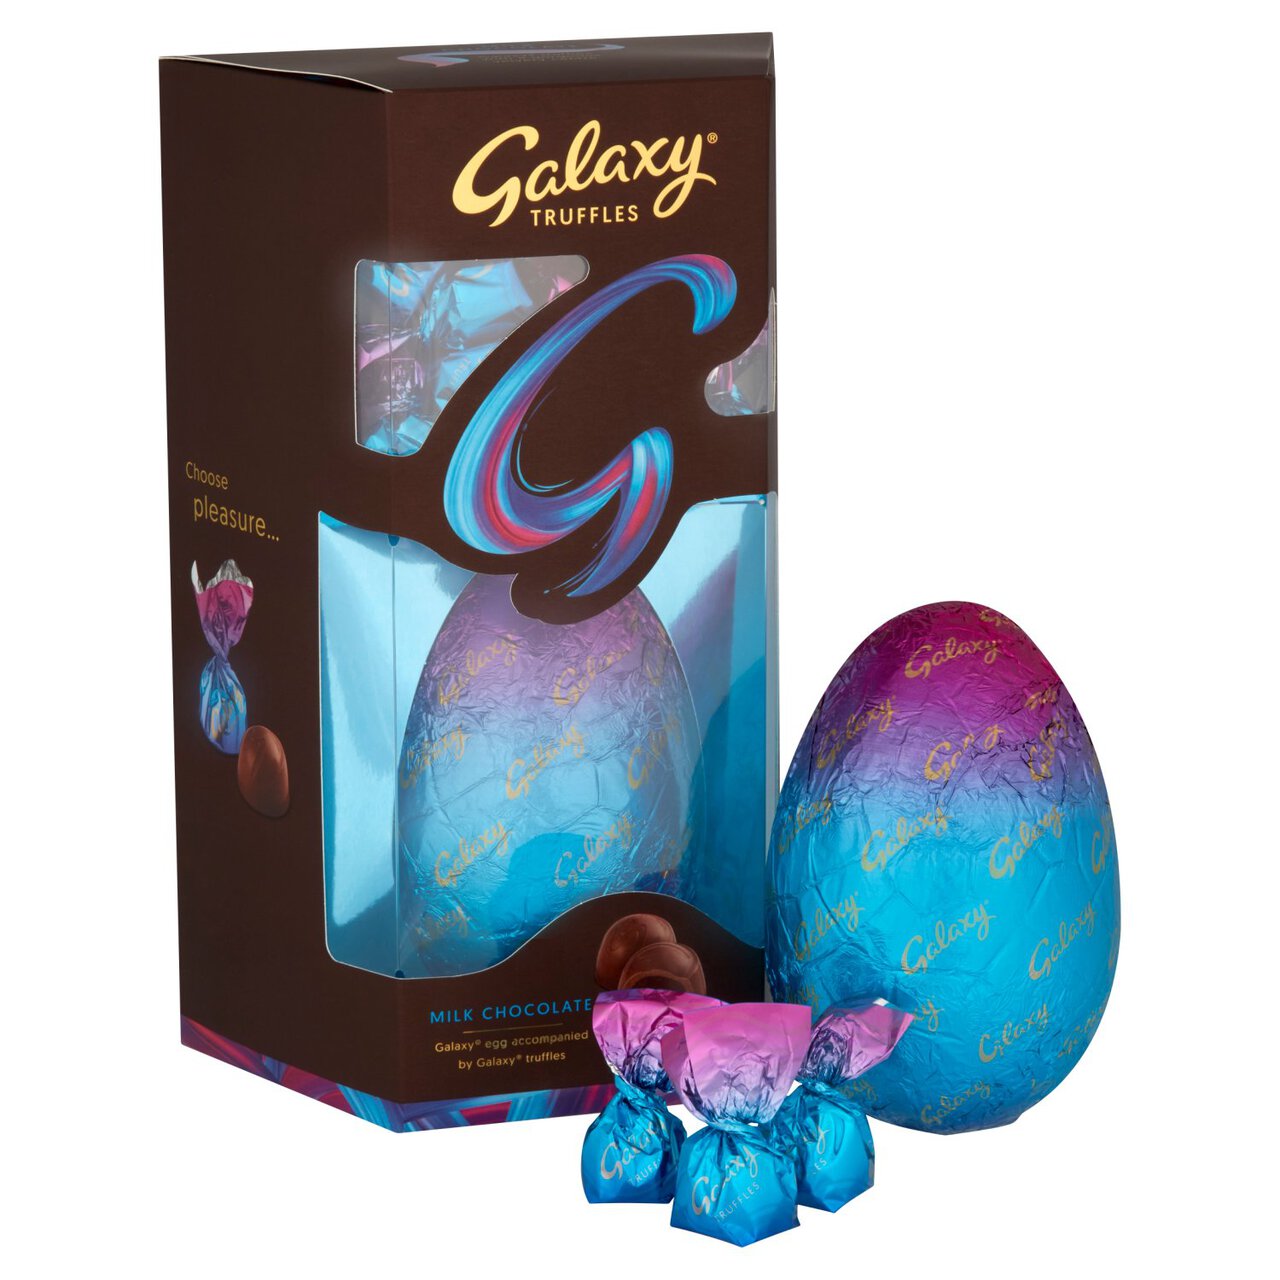 Galaxy Truffles Luxury Easter Egg 301g